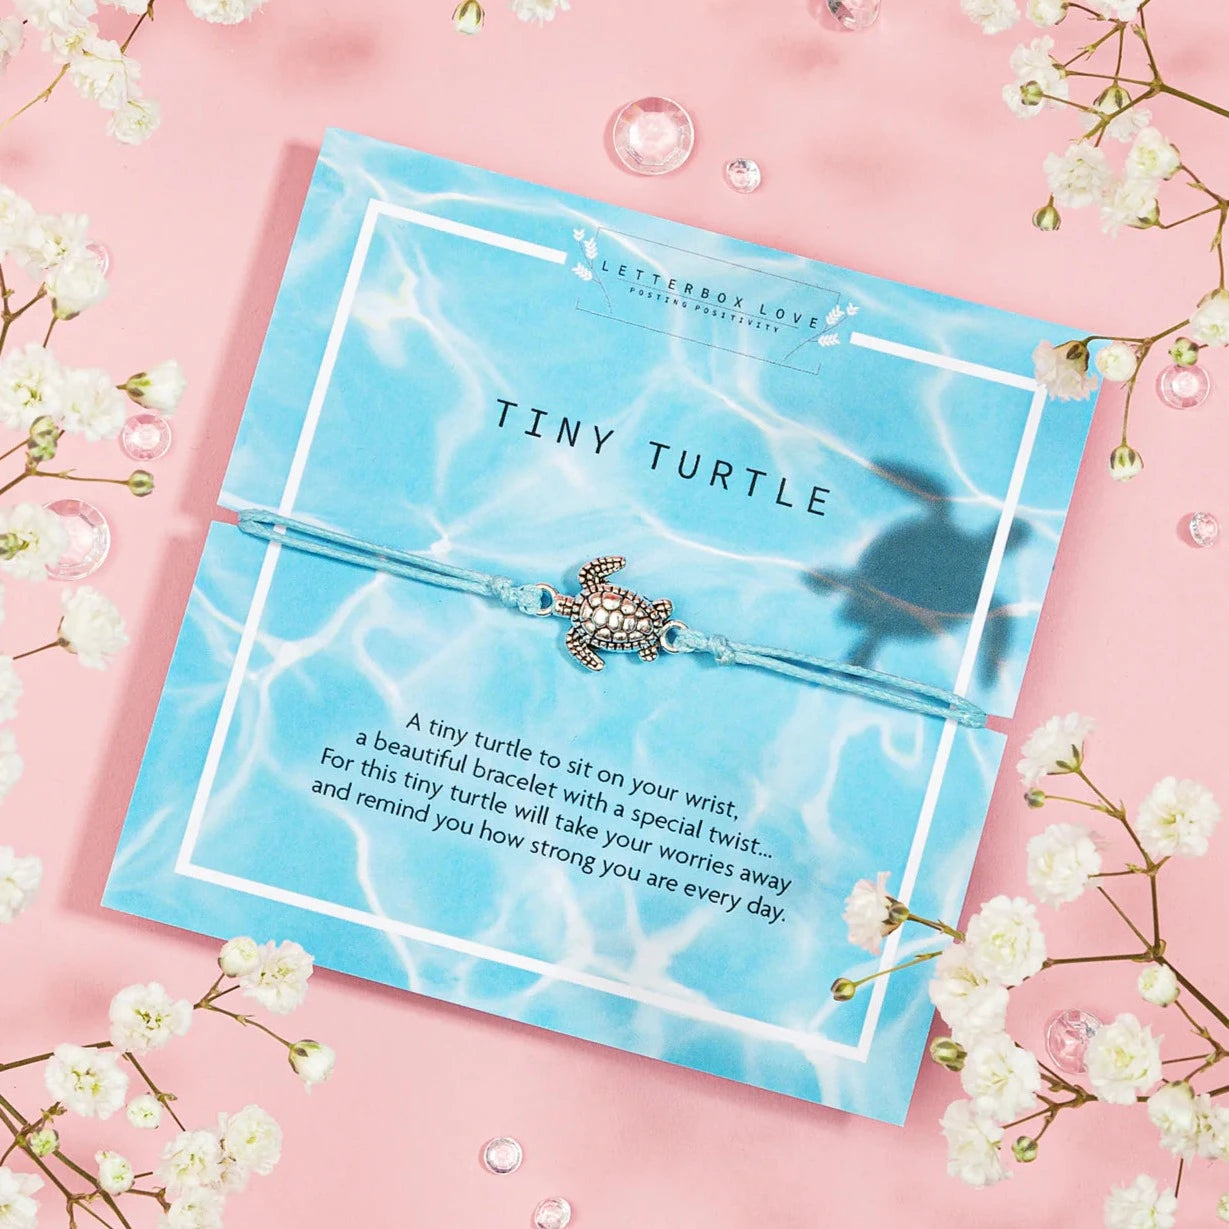 "Tiny Turtle" Keepsake Bracelet and Card Set